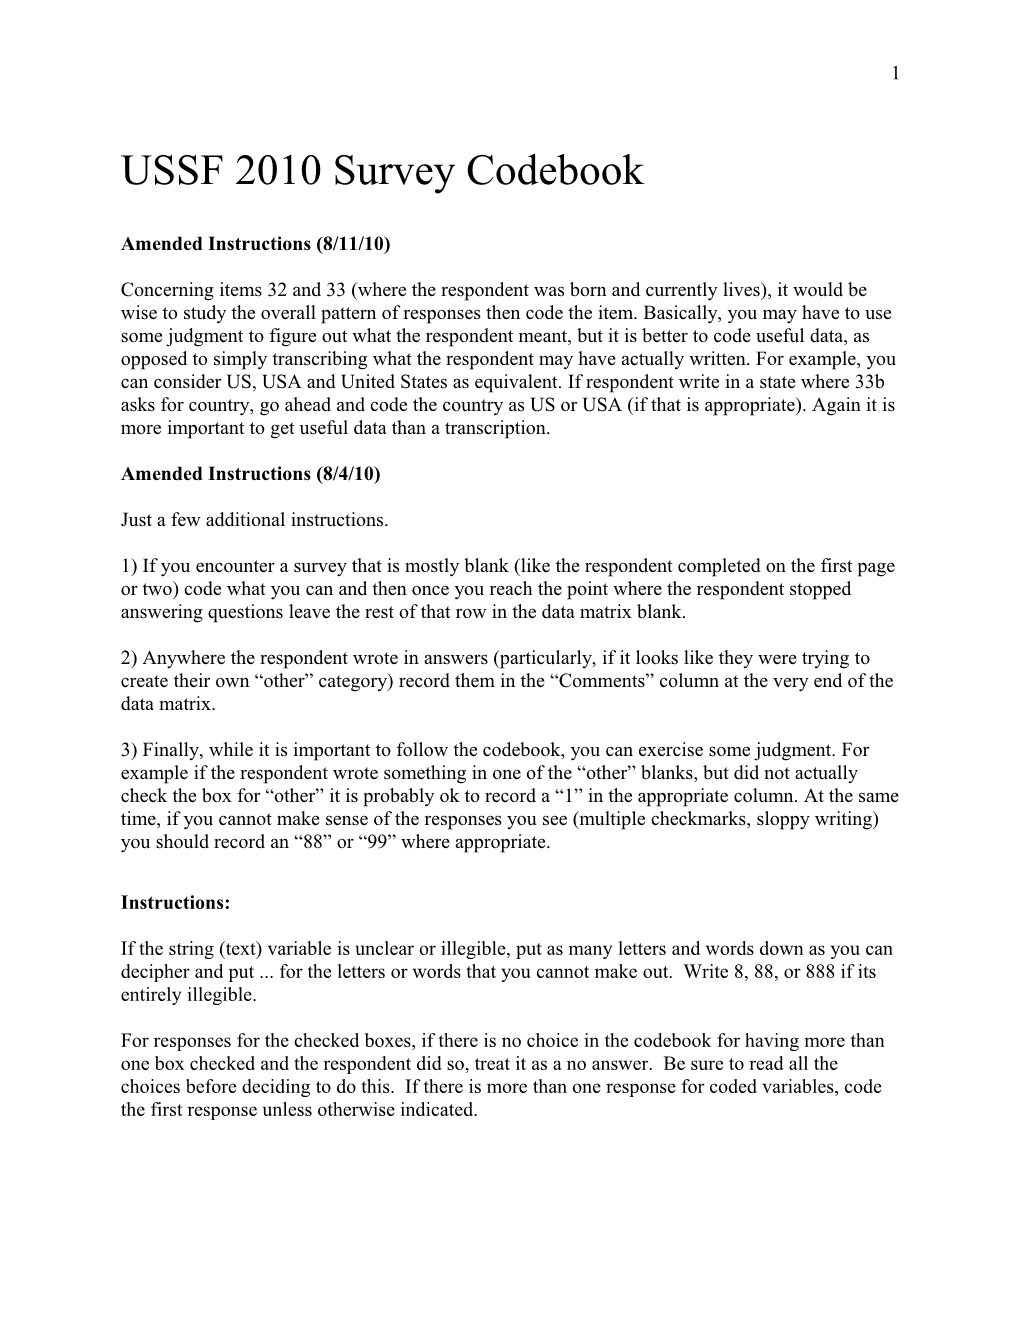 USSF 2010 Survey Codebook